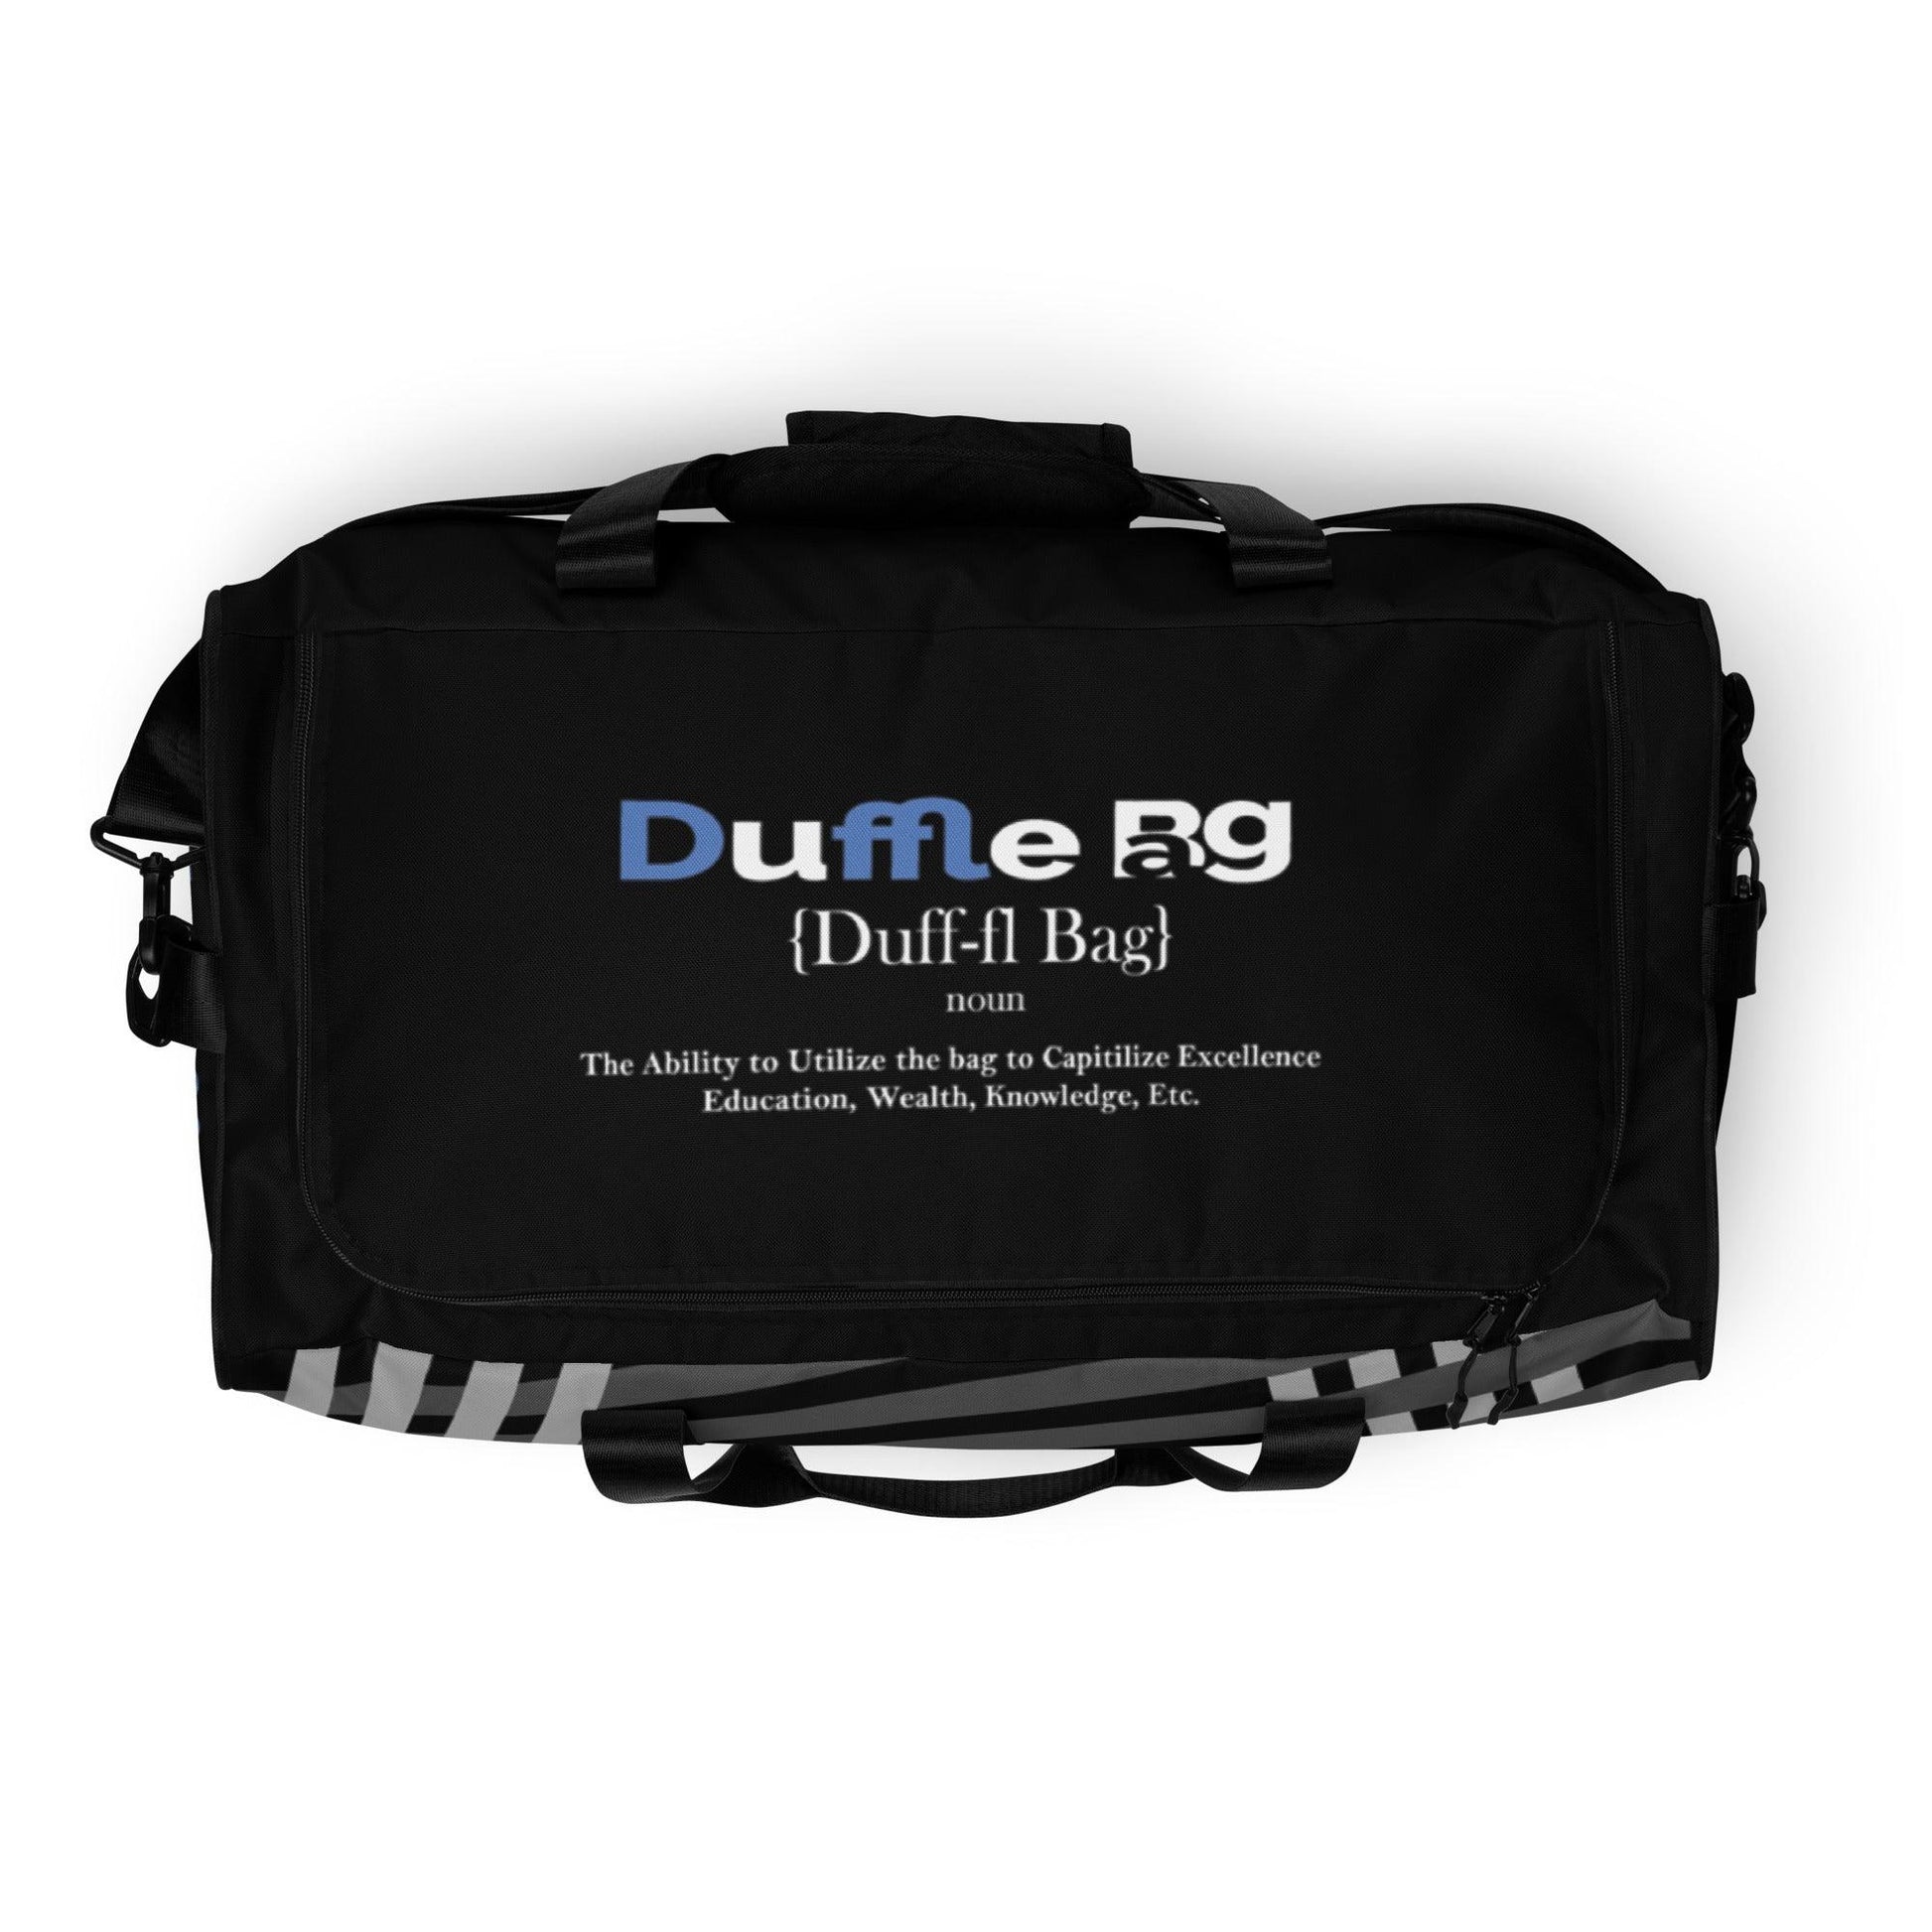 The Duffle Bag - Duffle Bag Apparel